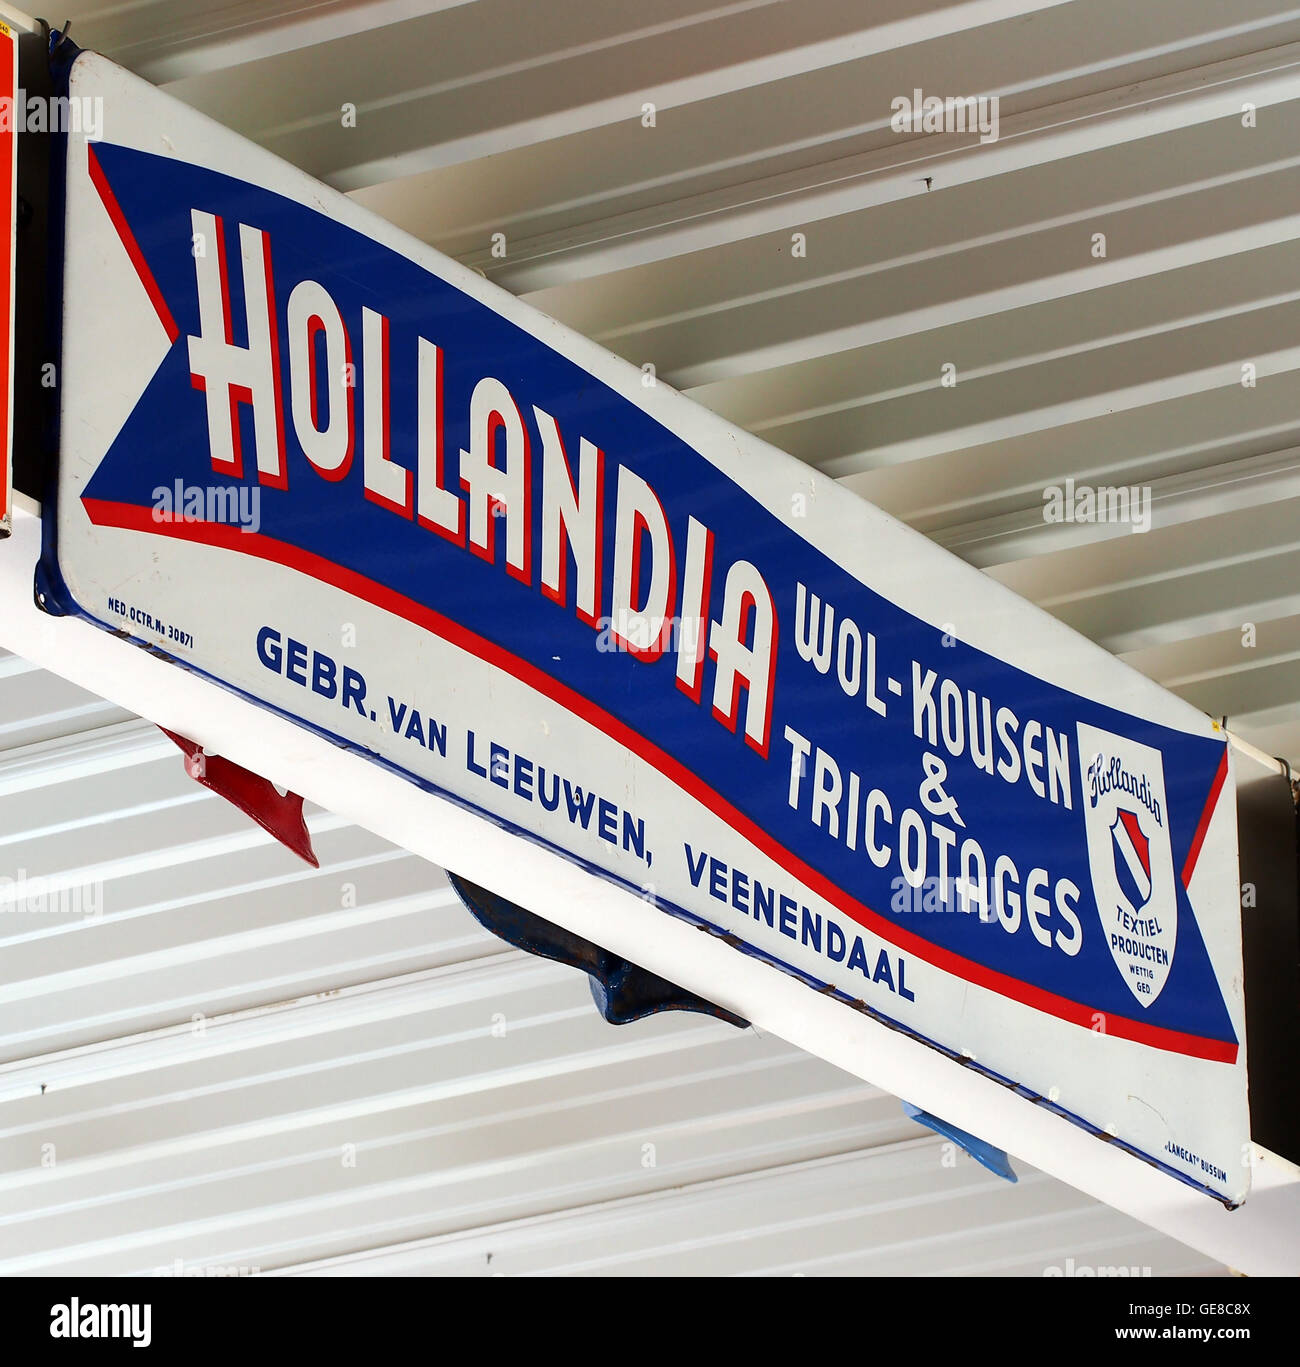 Hollandia, wol-kousen & reclamebord tricotages, Emaille Banque D'Images